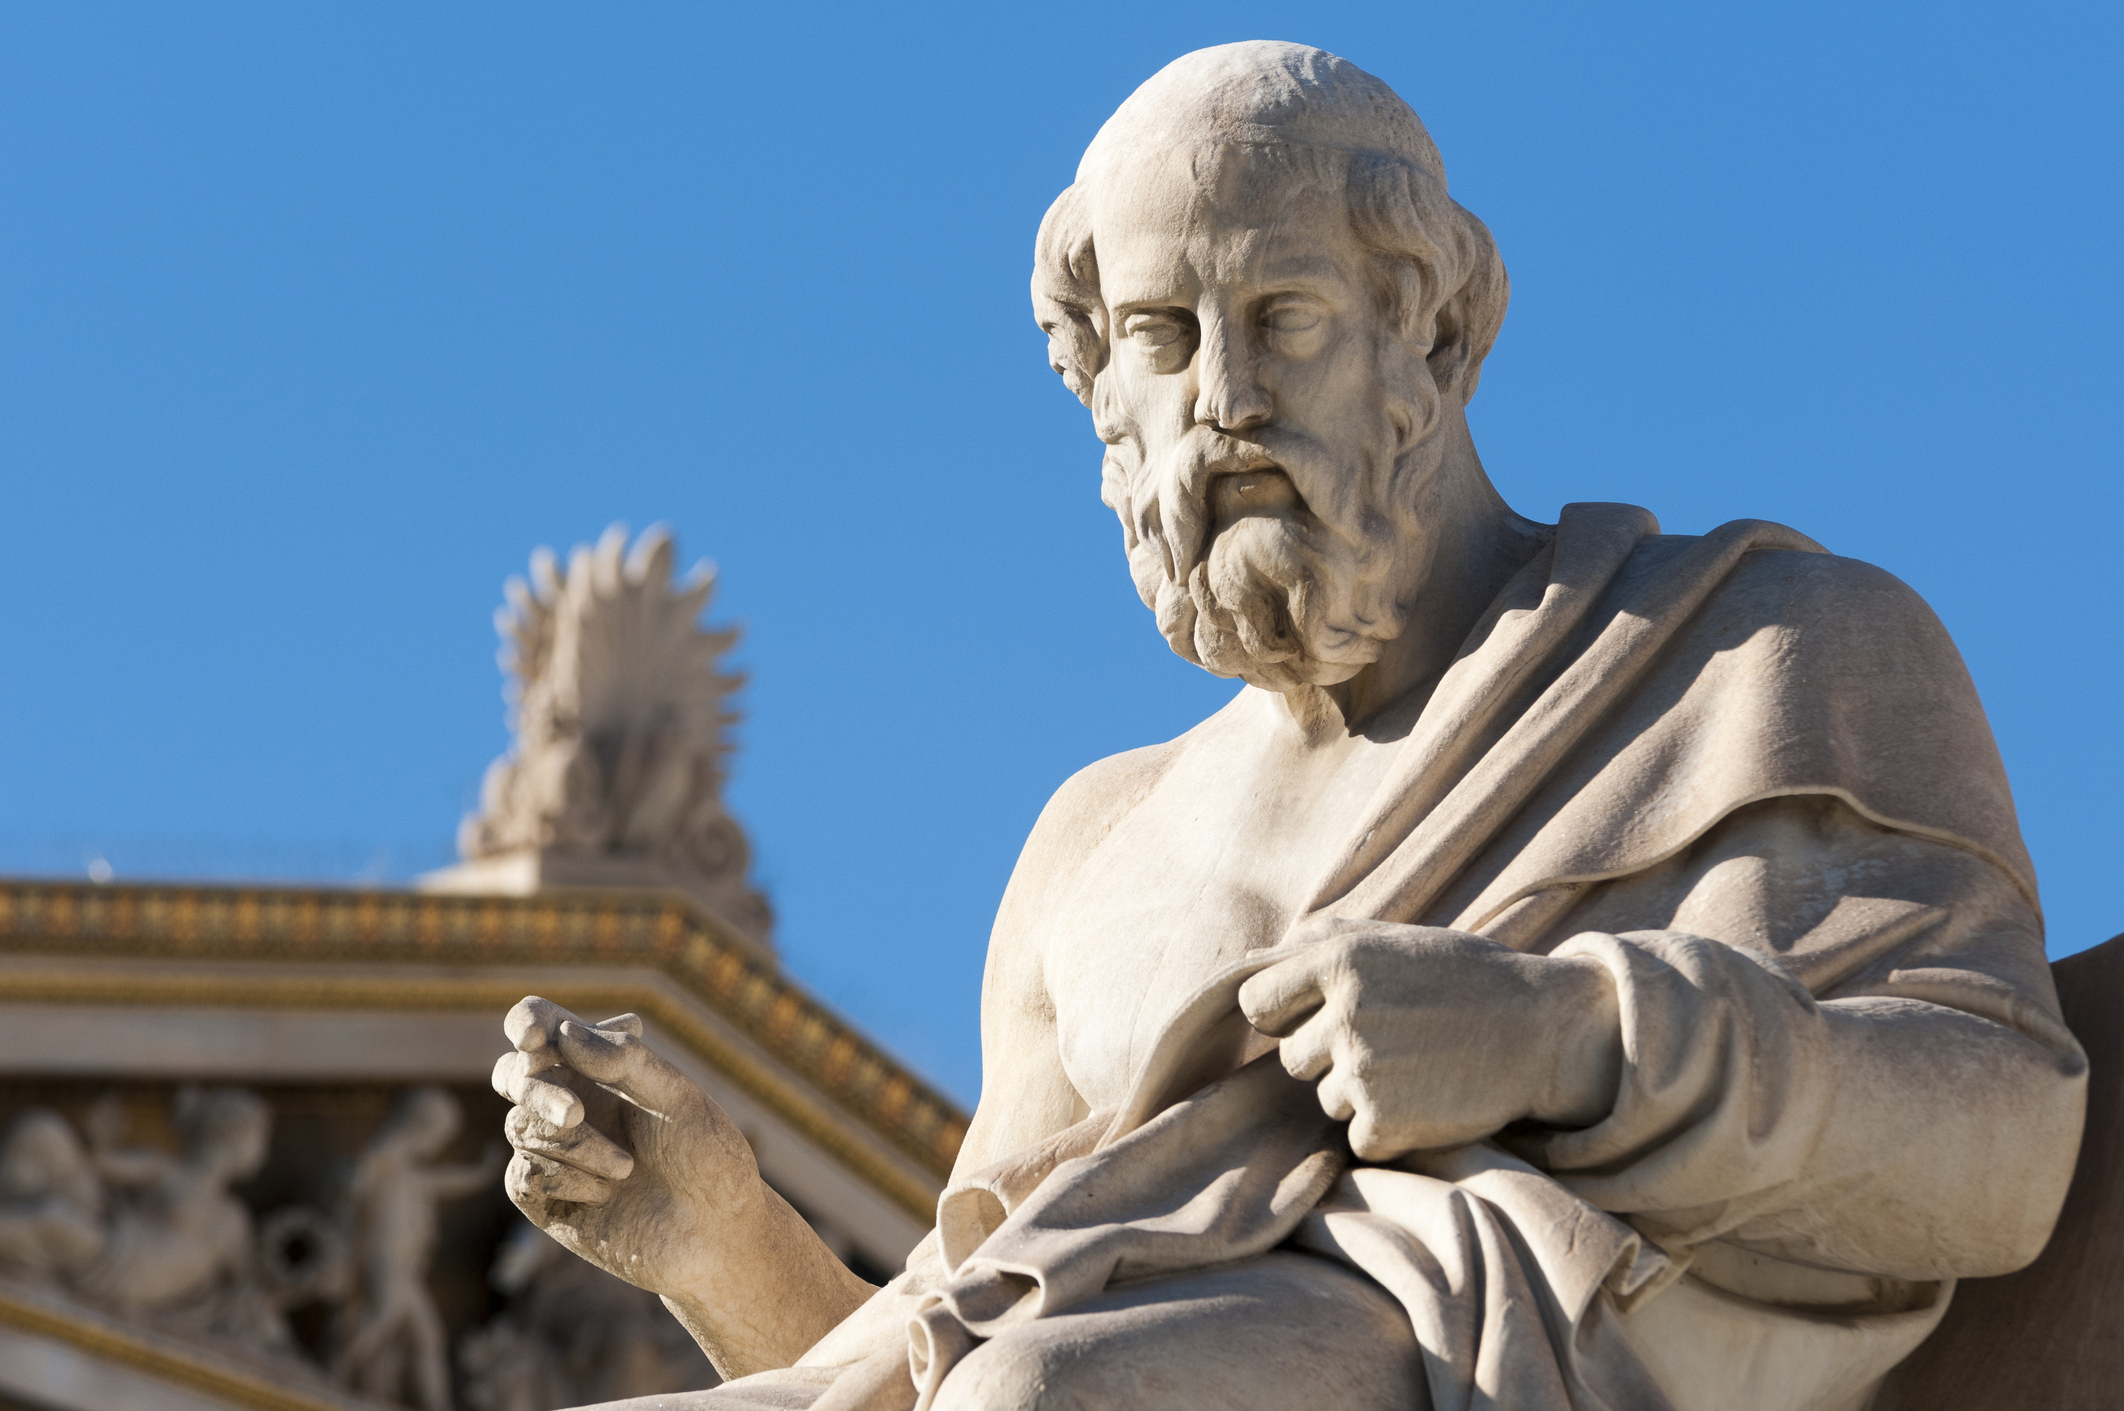 Statue of Plato against blue sky